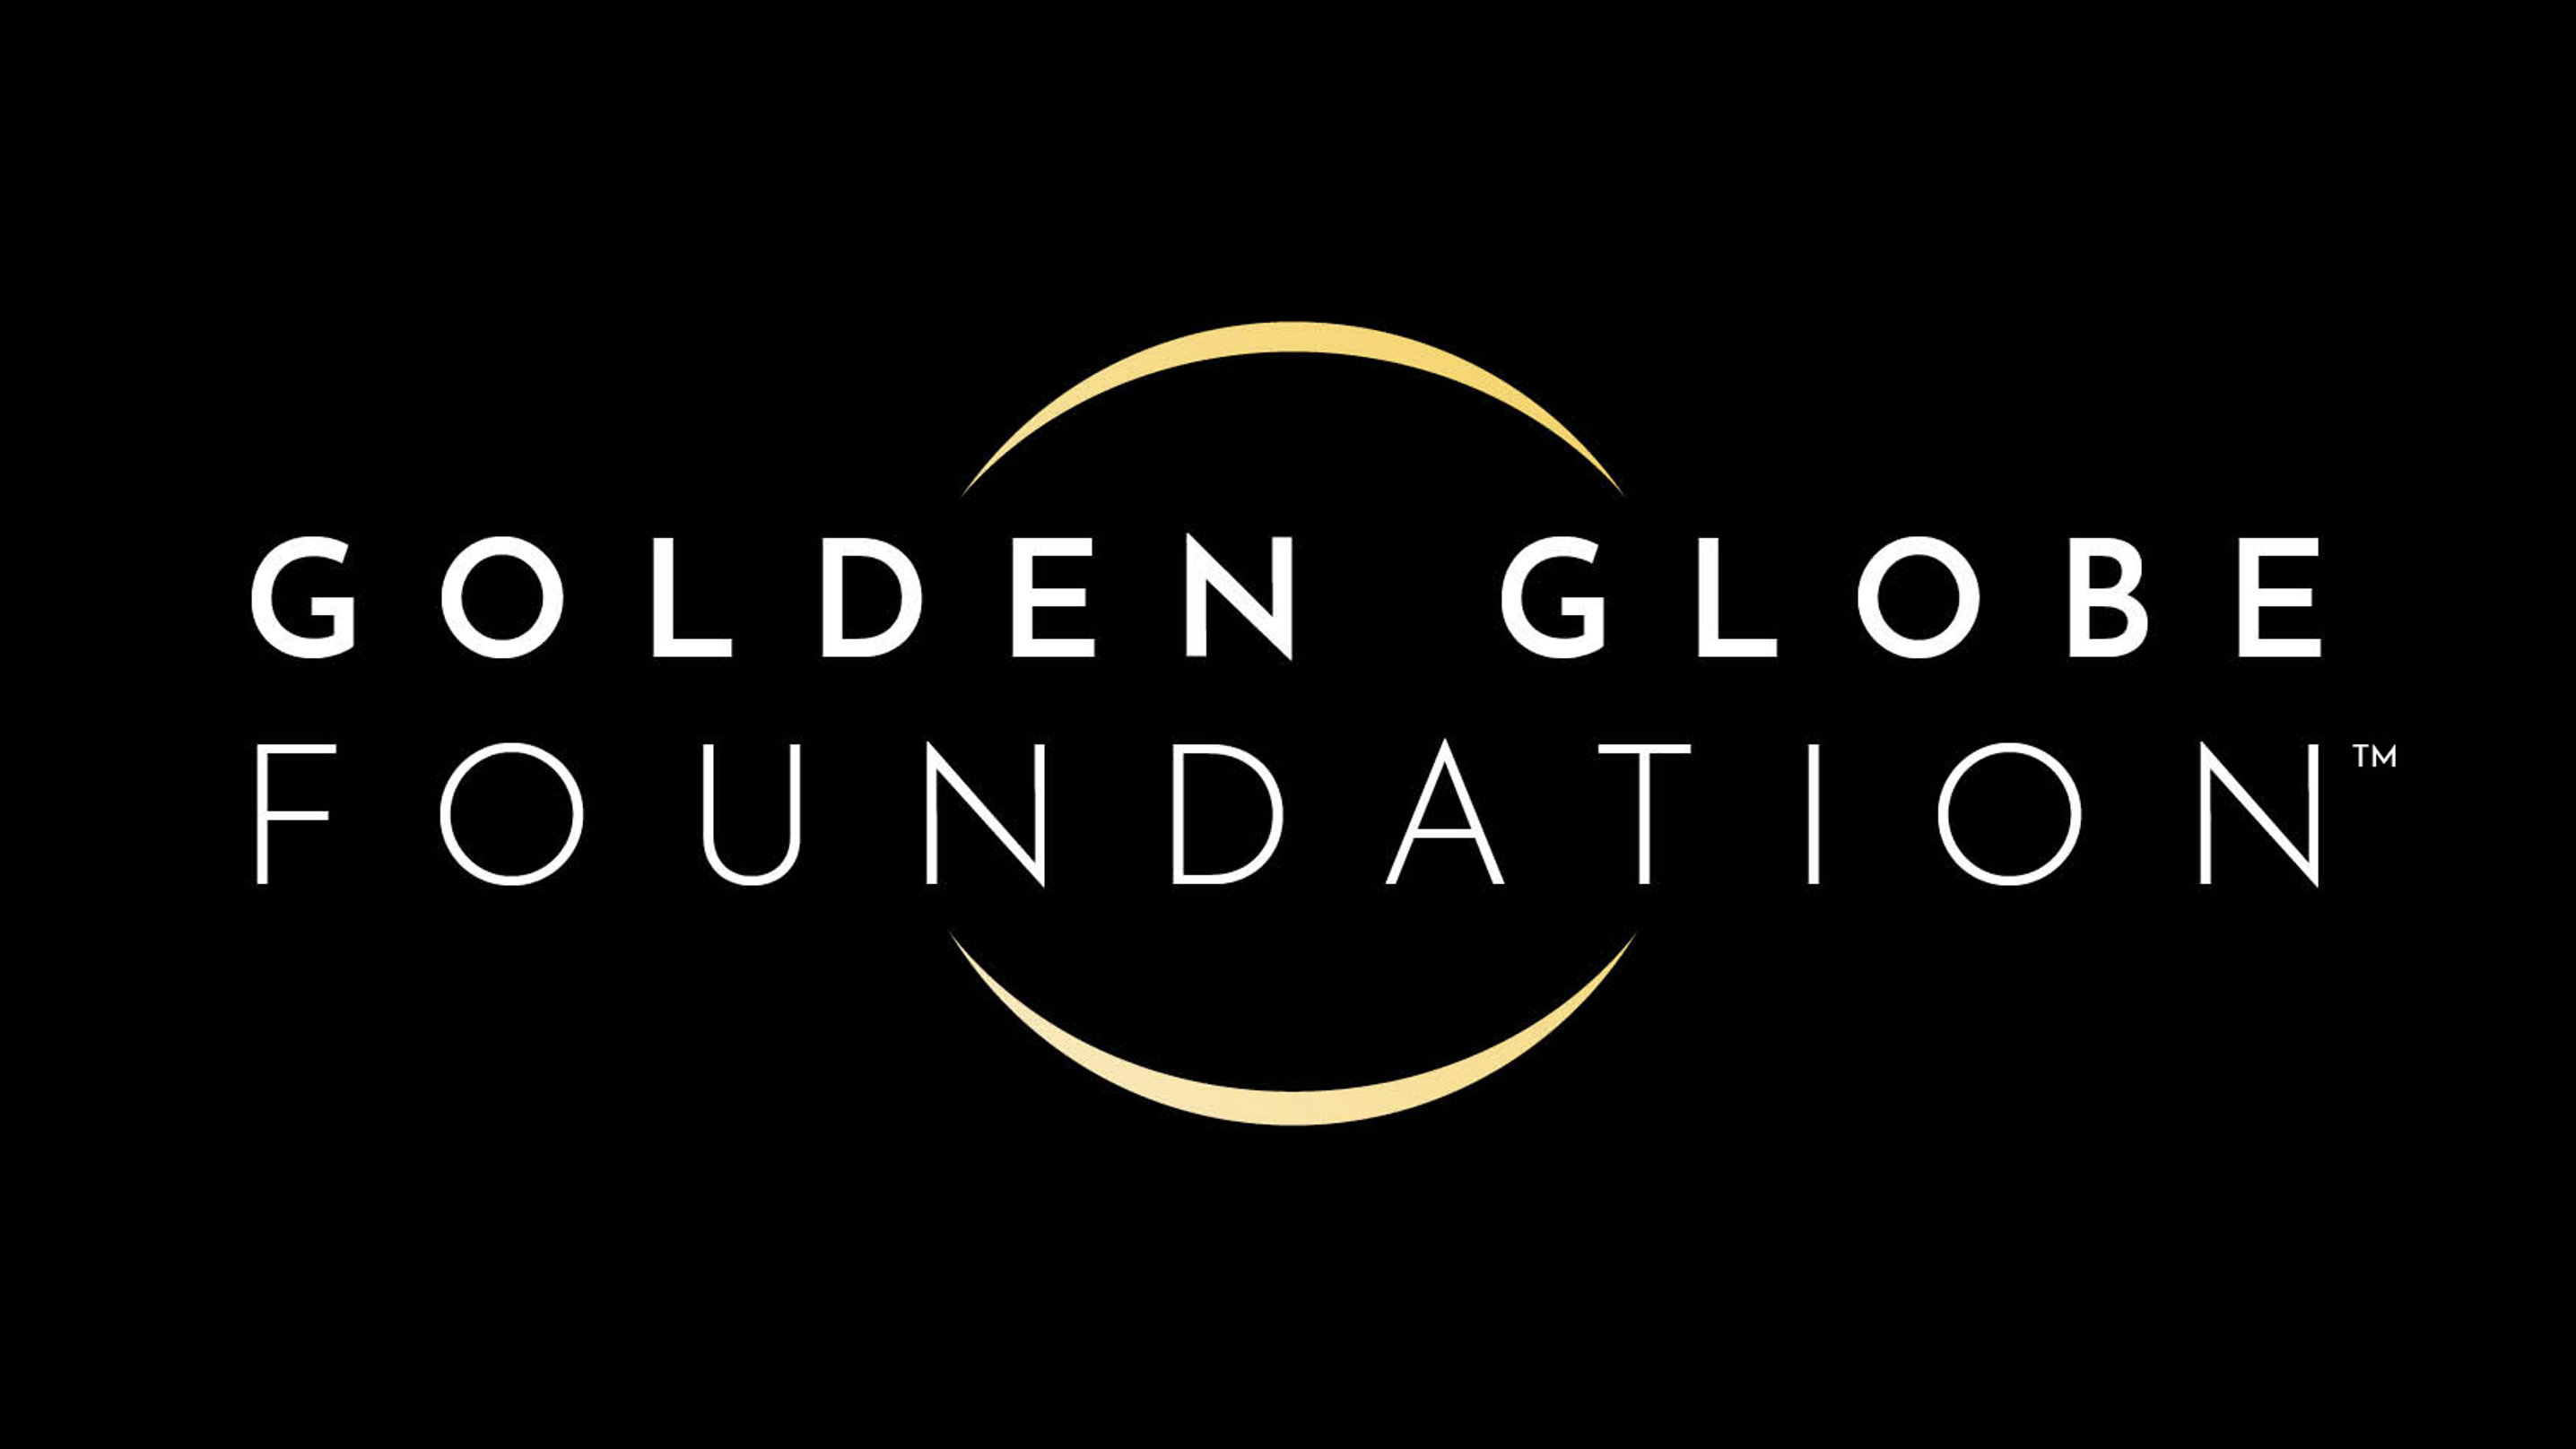 Golden Globe Foundation Awards Grants to SMC Journalism & Film Programs